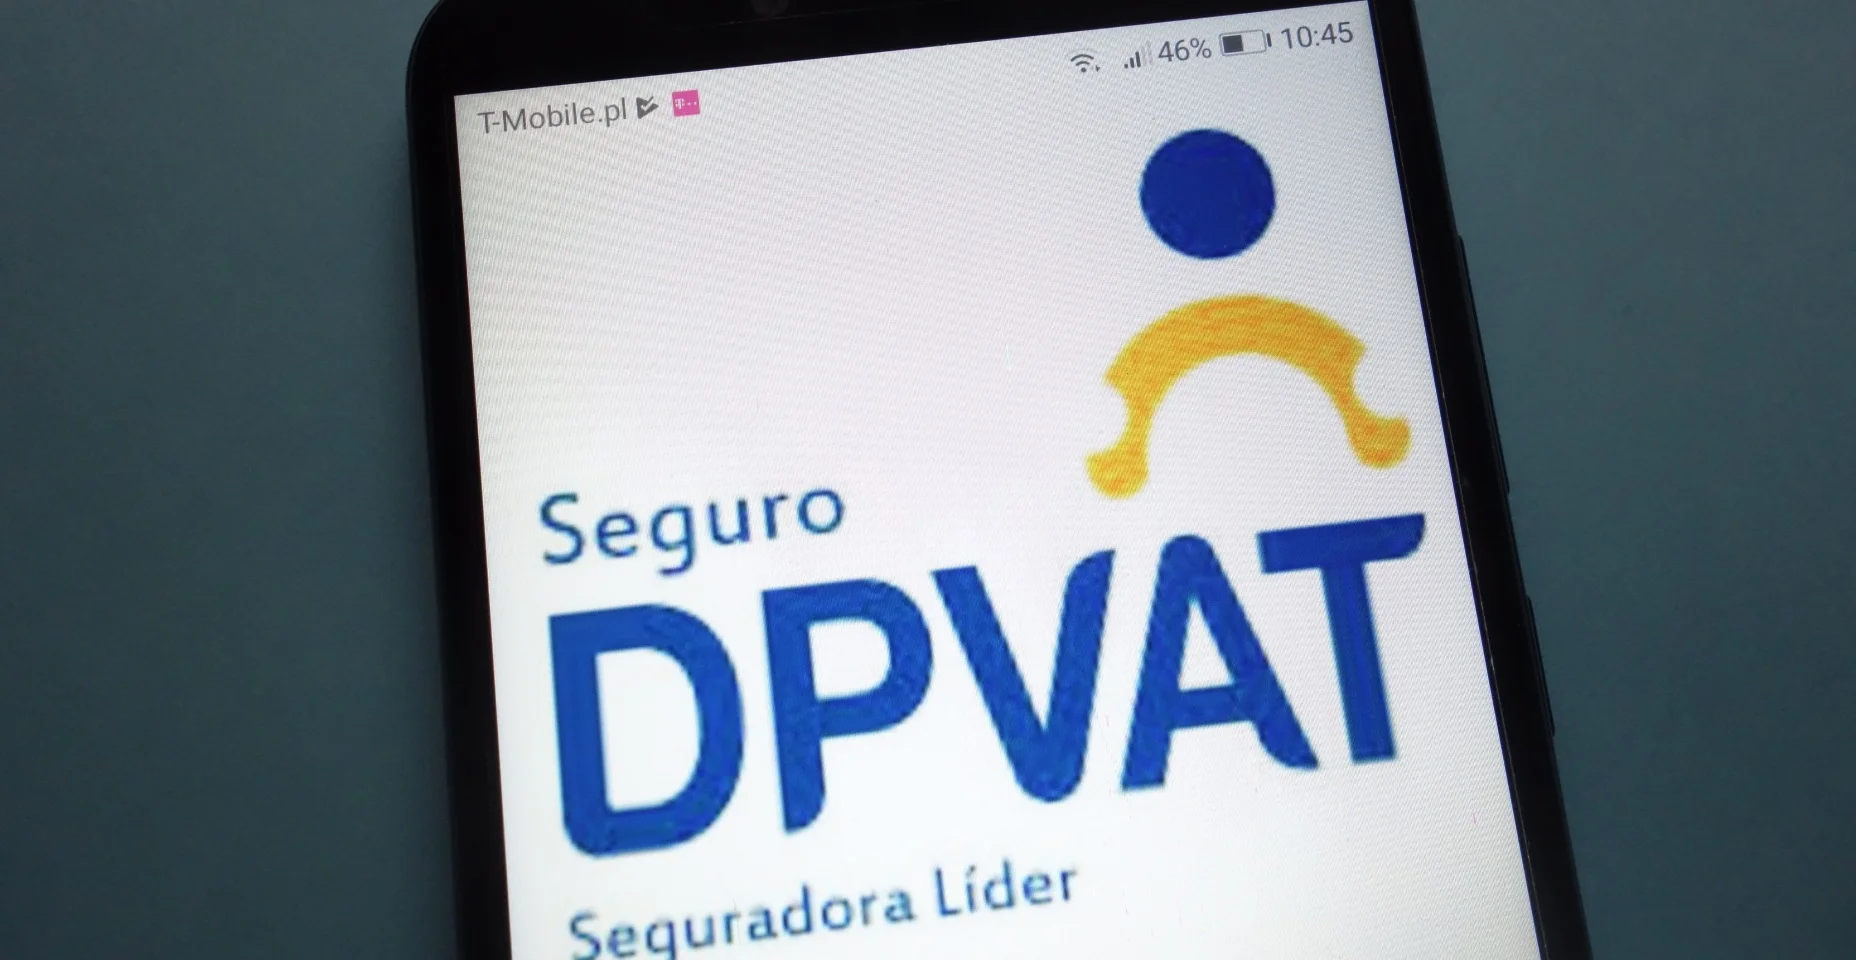 Logotipo DPVAT no smartphone